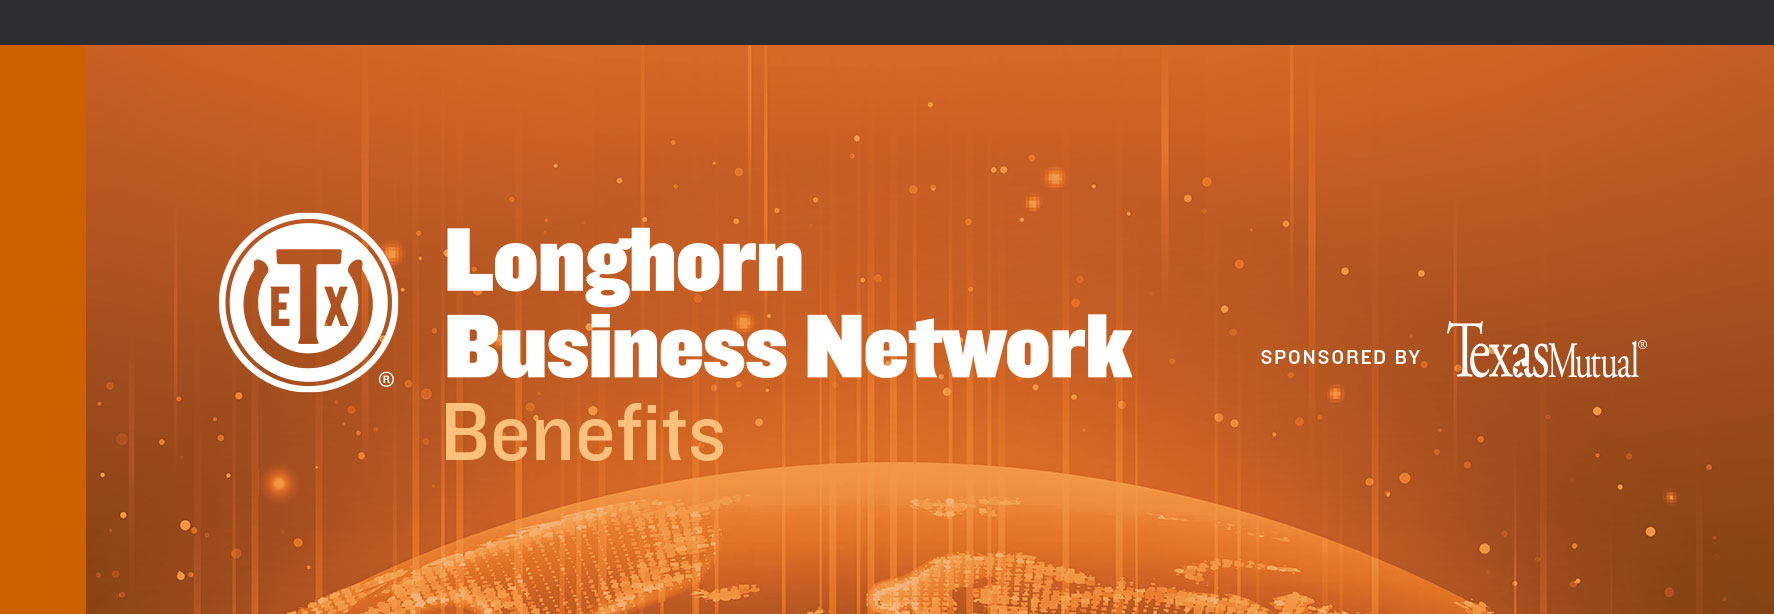 Longhorn Business Network Benefits